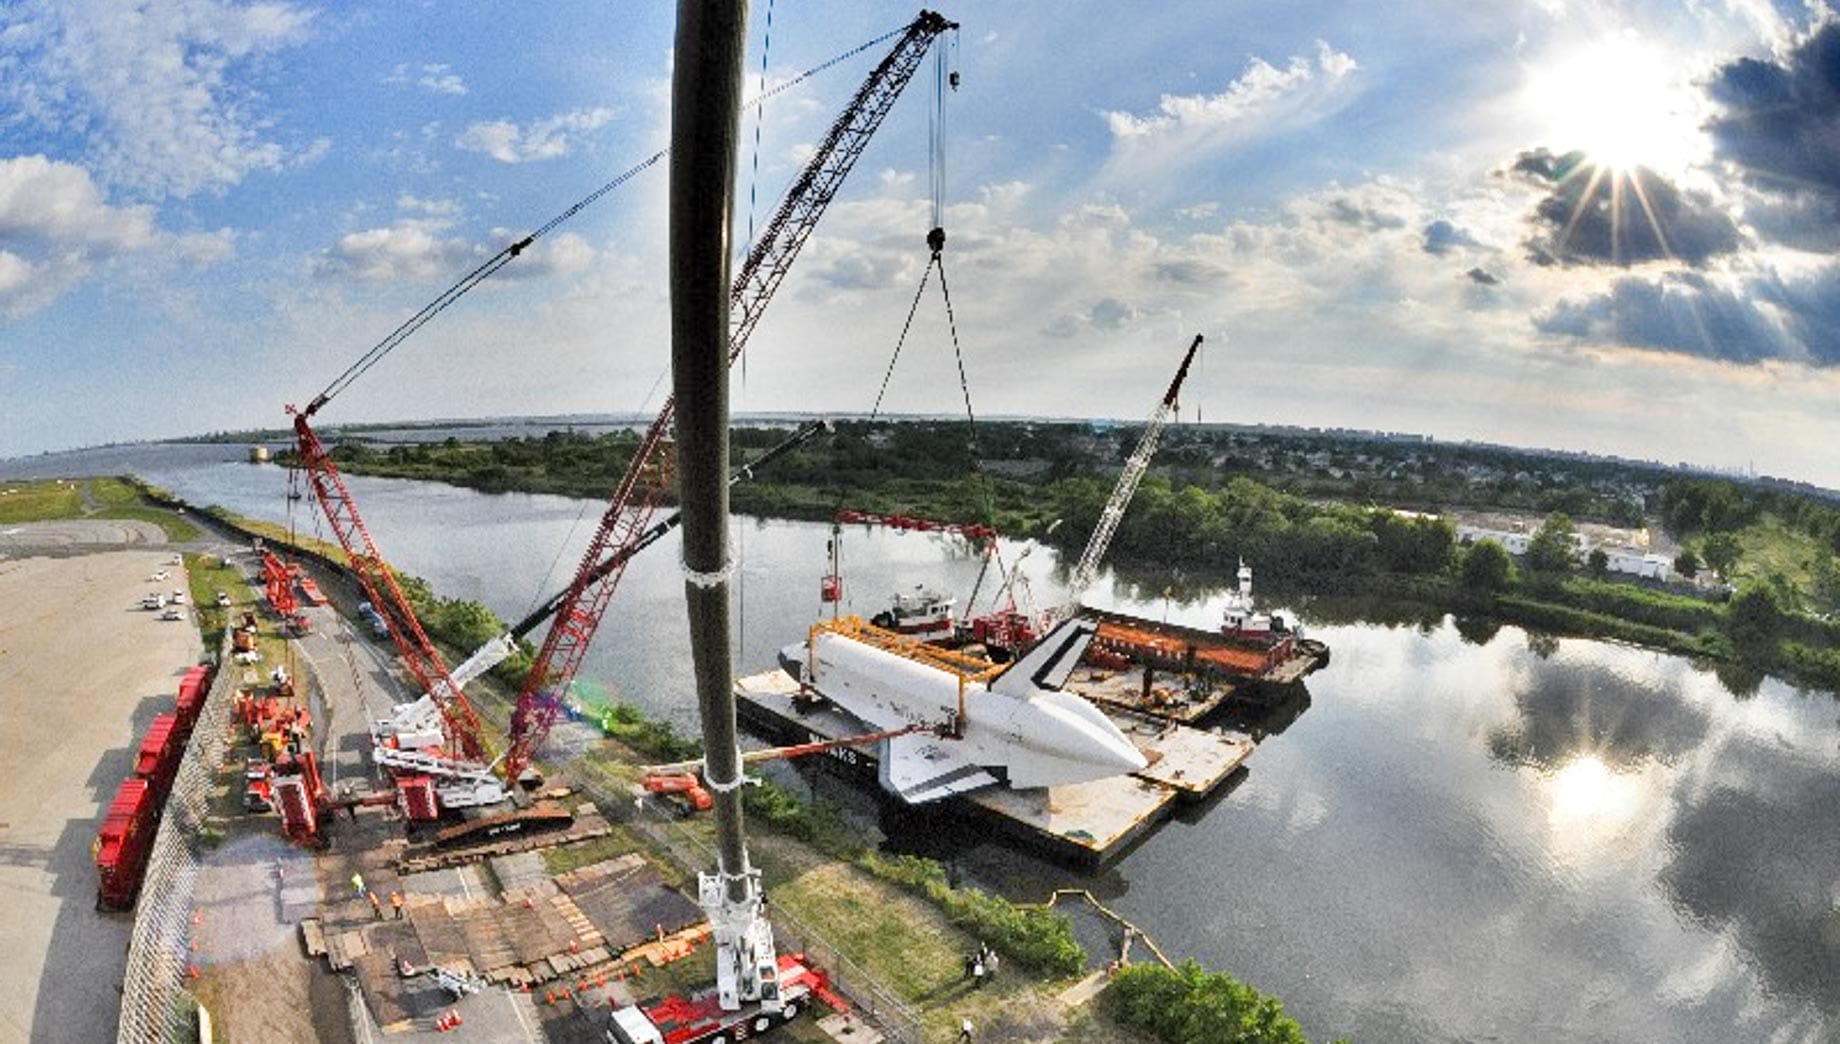 Crane lifting space shuttle onto river platform